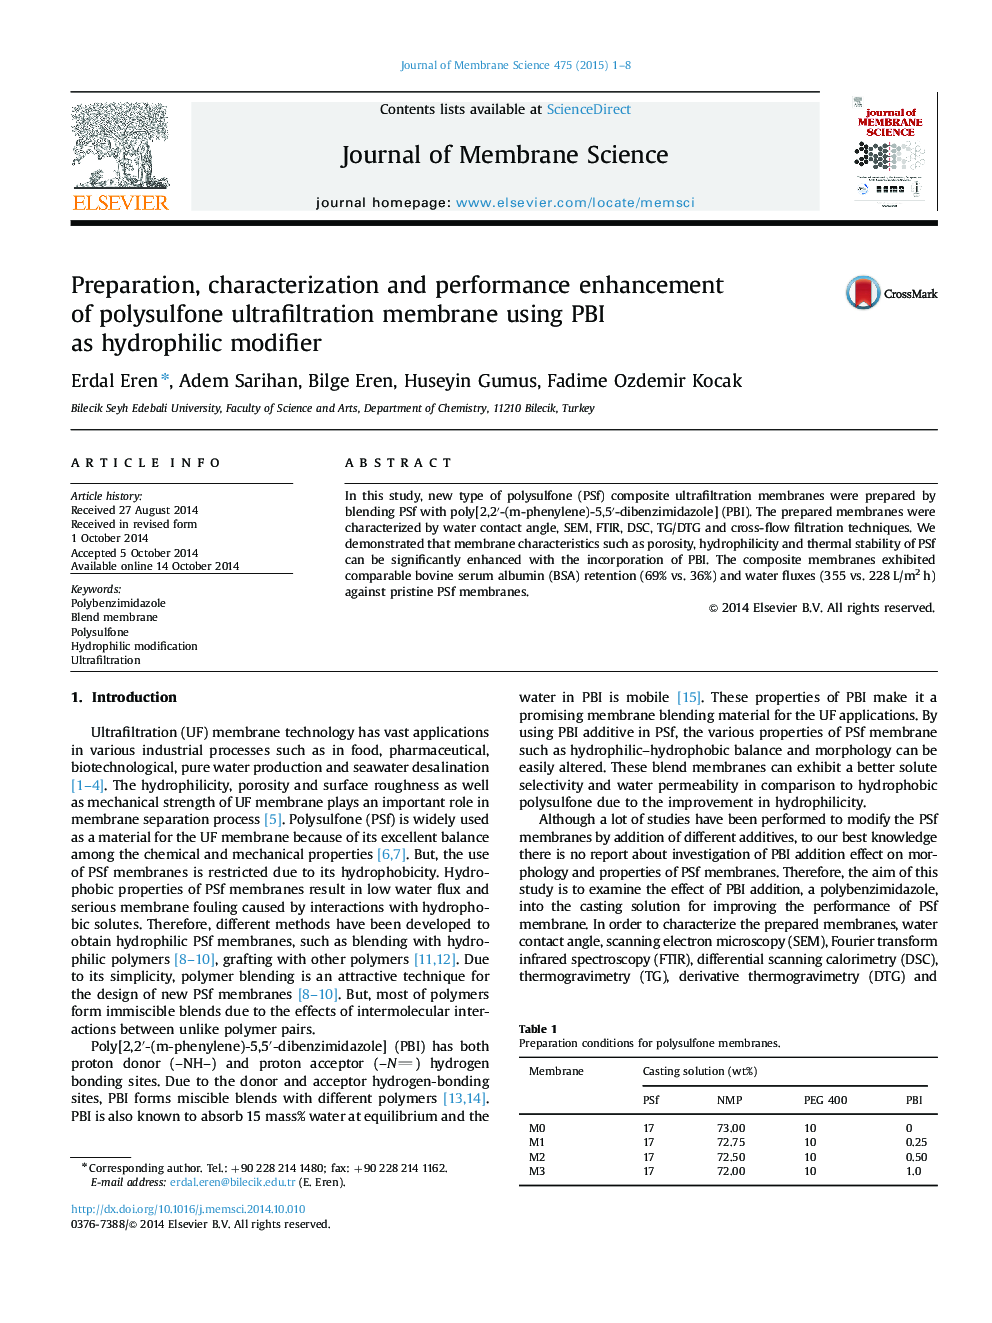 Preparation, characterization and performance enhancement of polysulfone ultrafiltration membrane using PBI as hydrophilic modifier